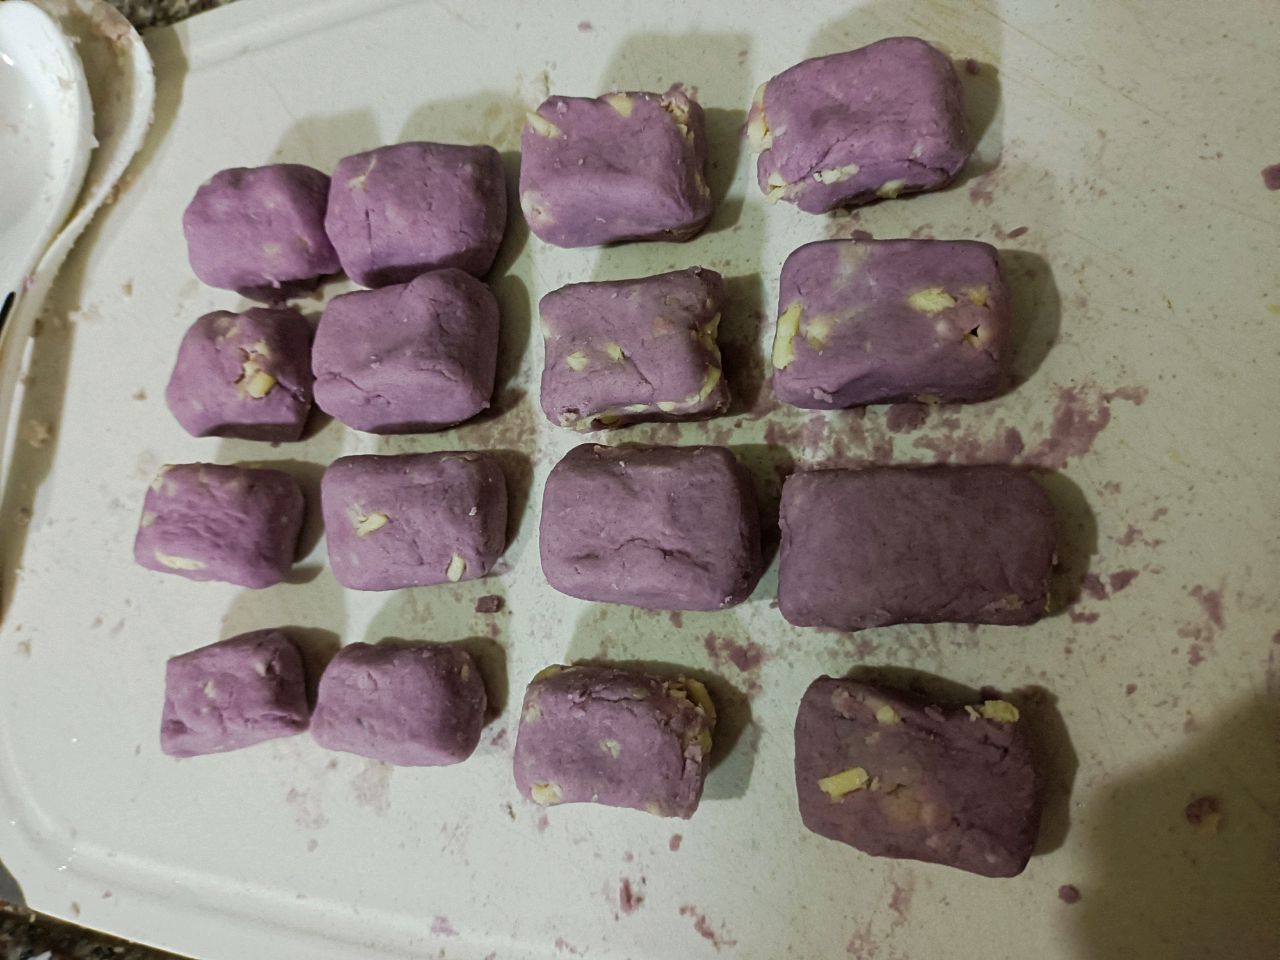 Missta's Kitchen: 新春賀年糕點～椰汁黑糖紫薯年糕 Sweet potato Glutinous Rice Cake